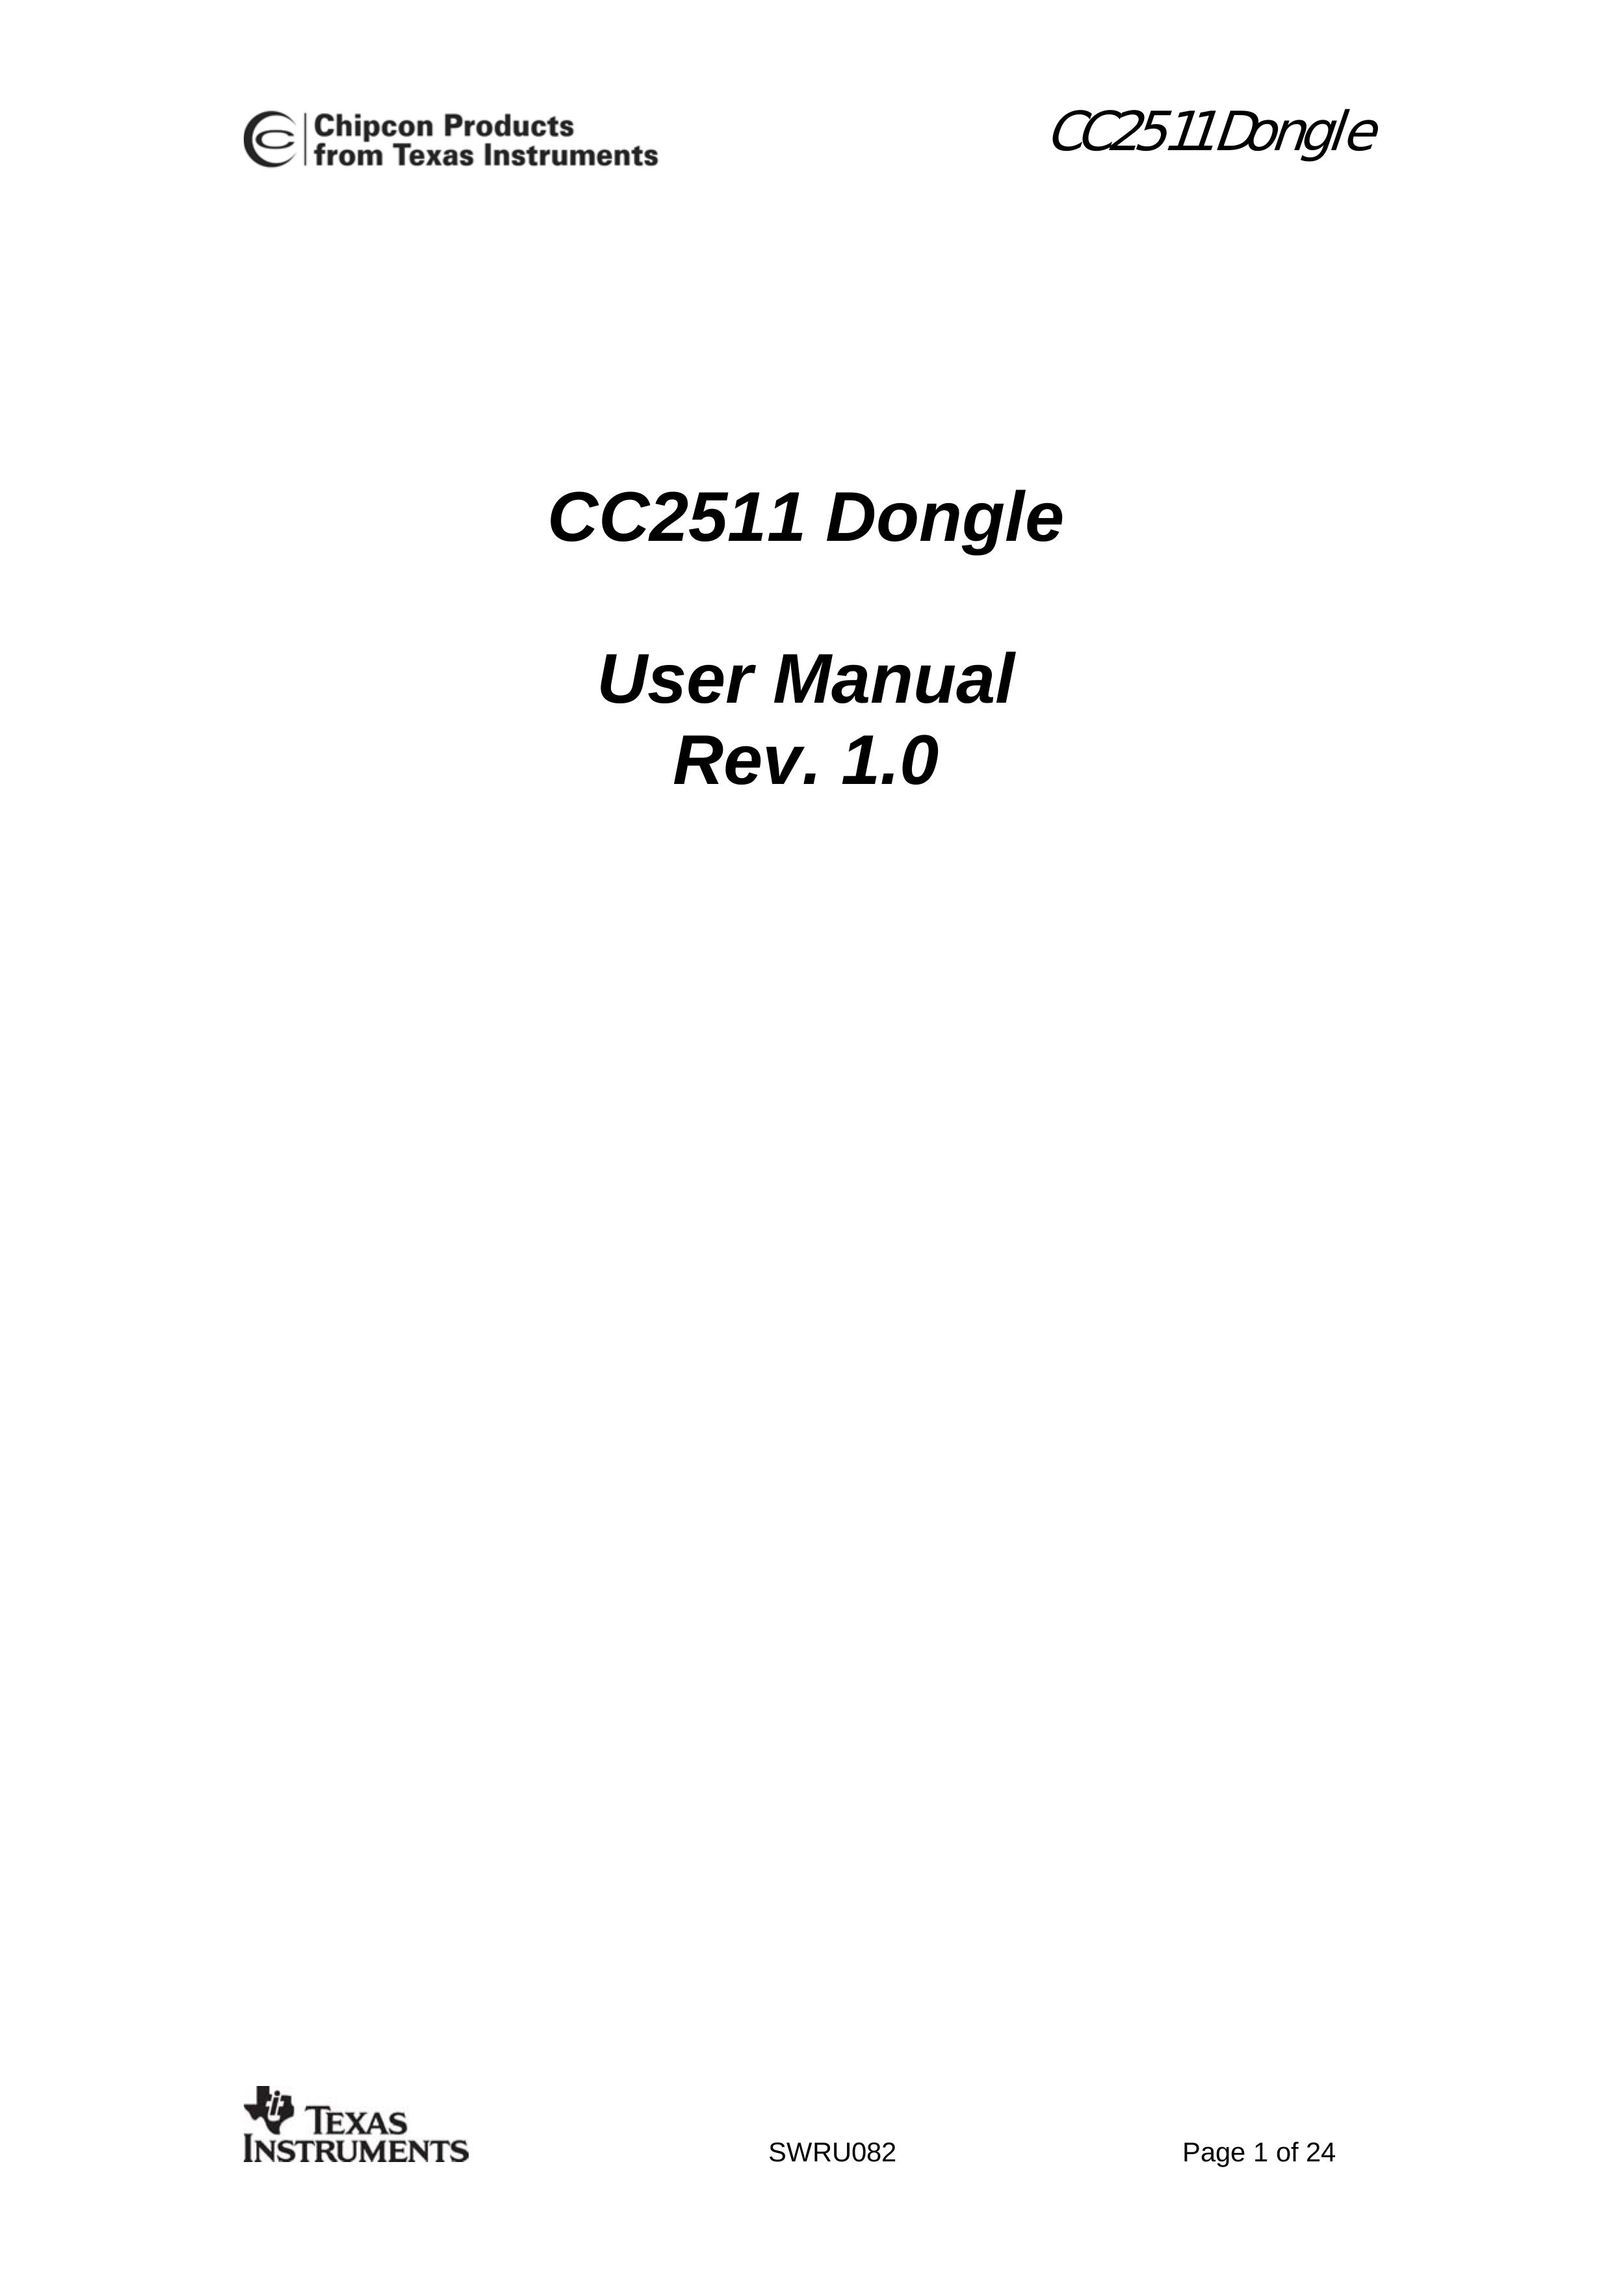 Texas Instruments CC2511 Network Card User Manual